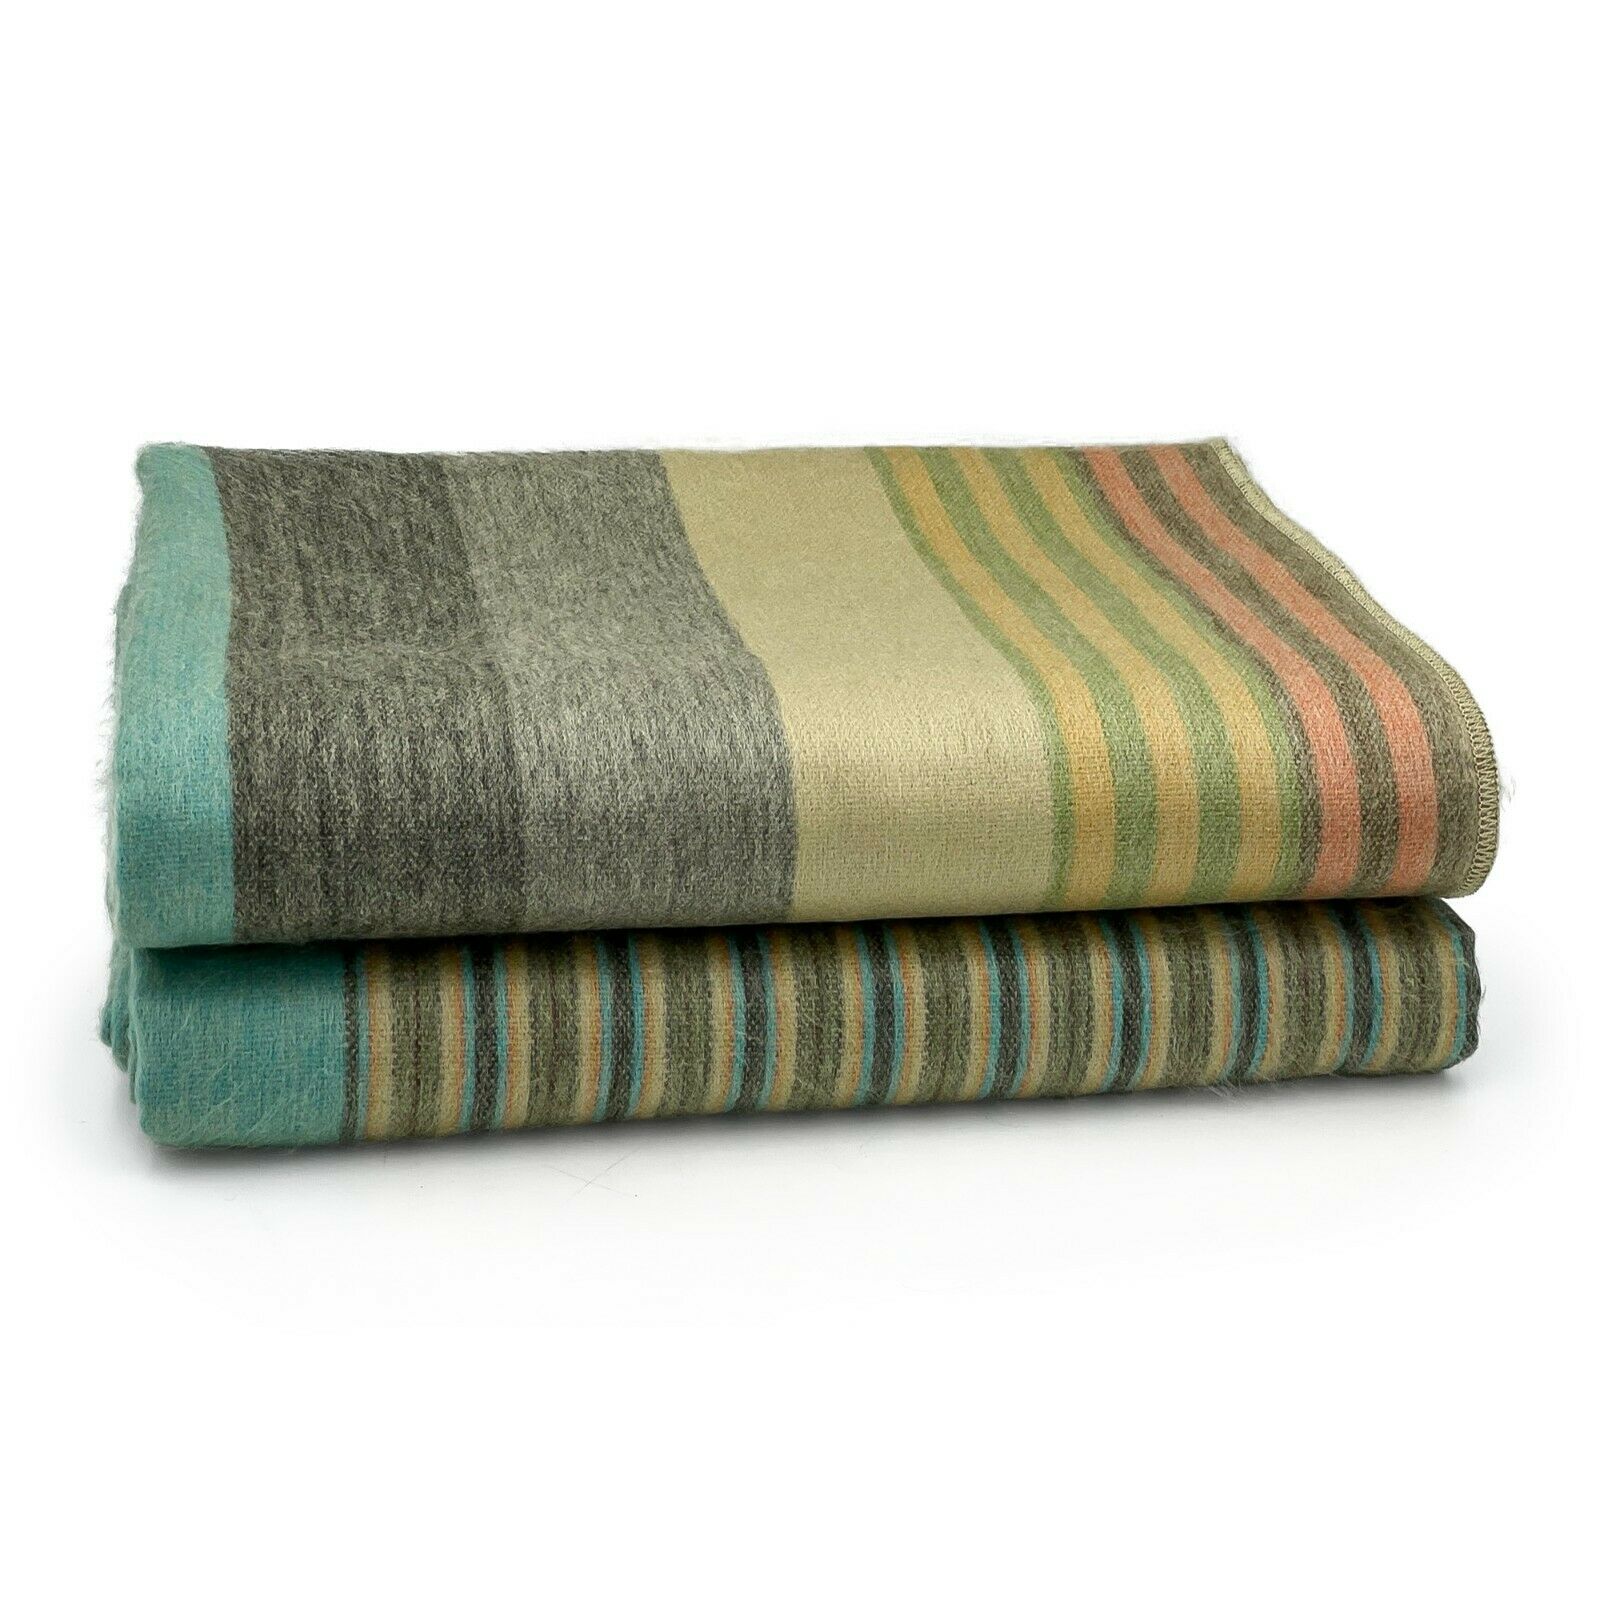 Cojitambo - Baby Alpaca Wool Throw Blanket / Sofa Cover - Queen 95" x 67" - multi colored stripes pattern